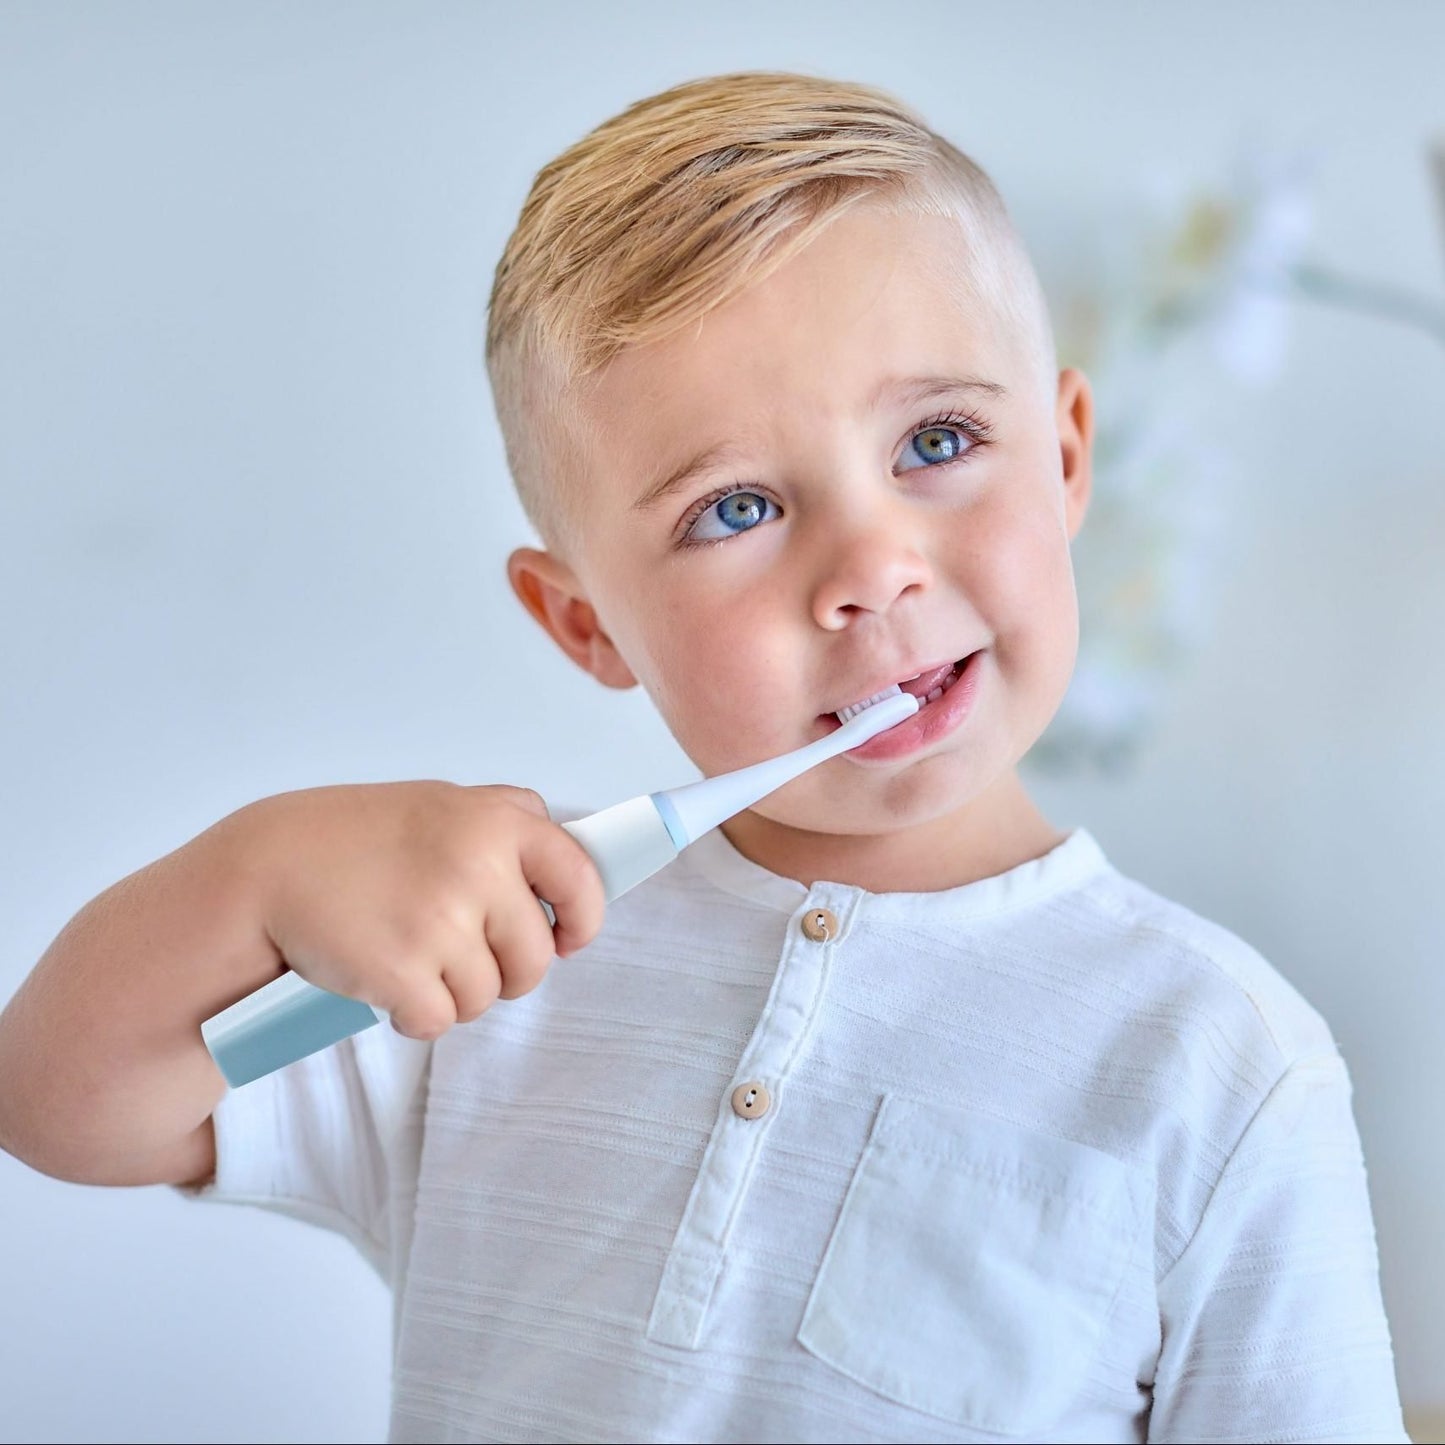 Kids 2-Min Timer Sonic Toothbrush (Bristle)